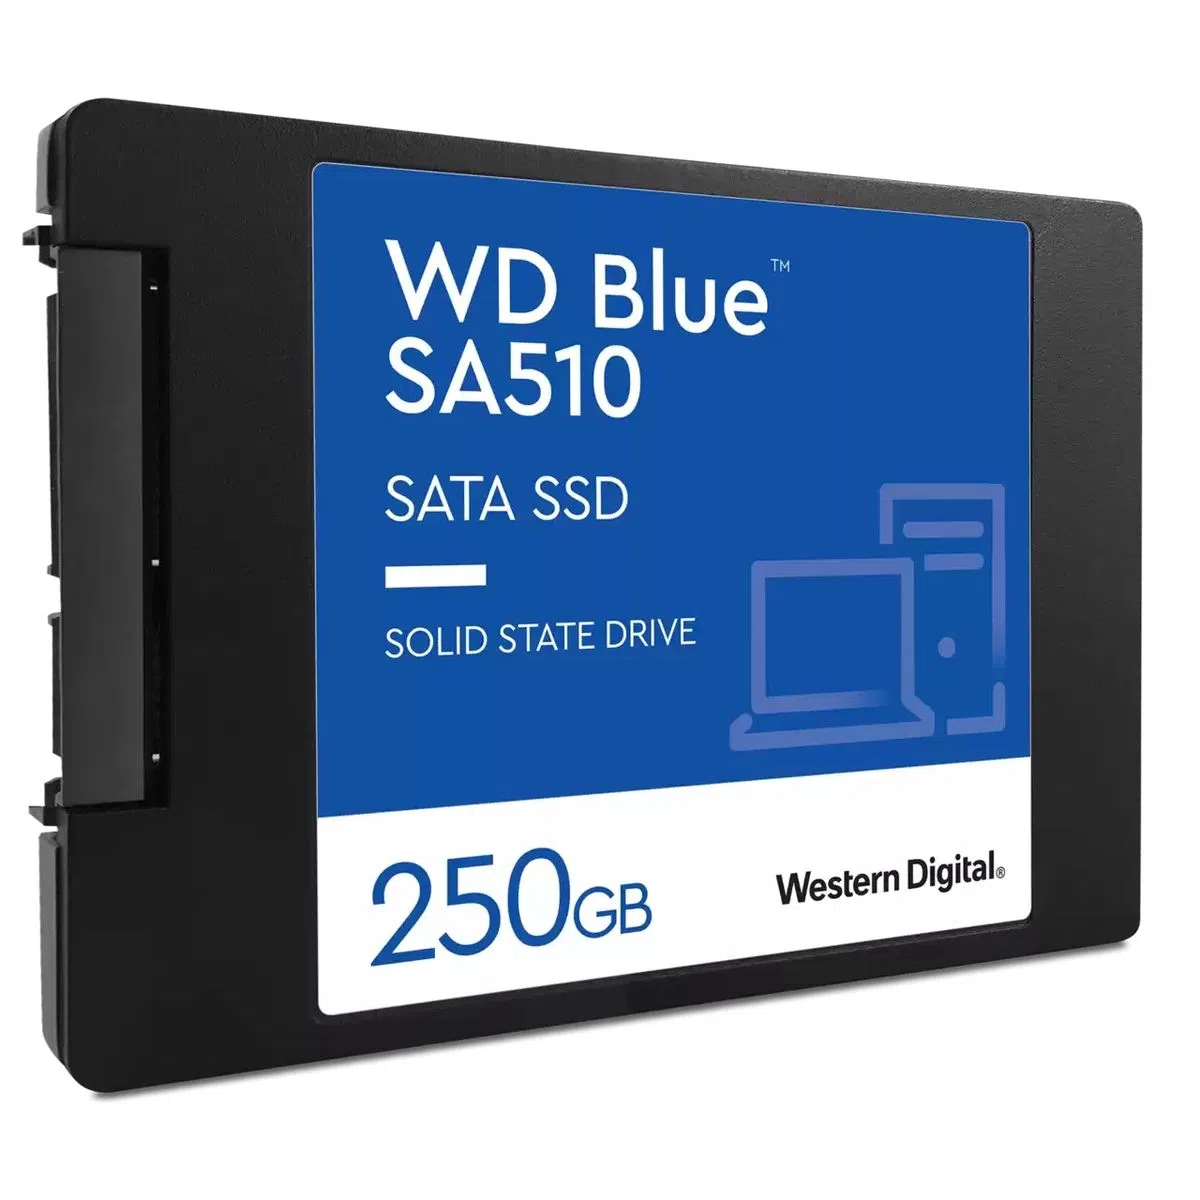 WD Blue SA510 Disque dur solide SSD 250 Go SATA 3